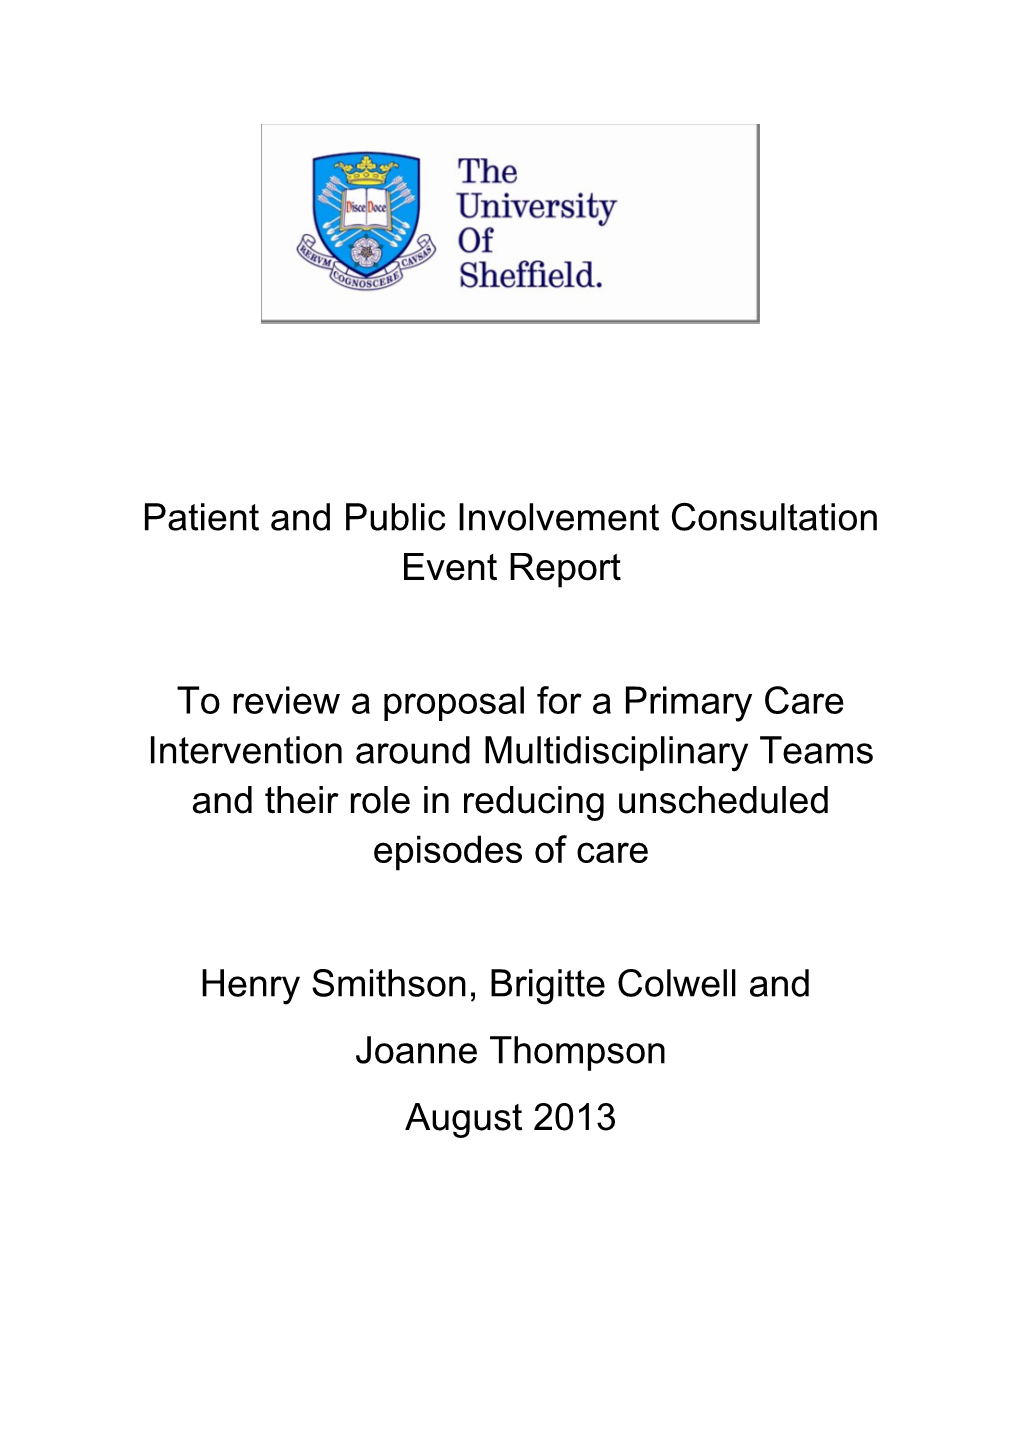 Patient and Public Involvement Consultation Event Report